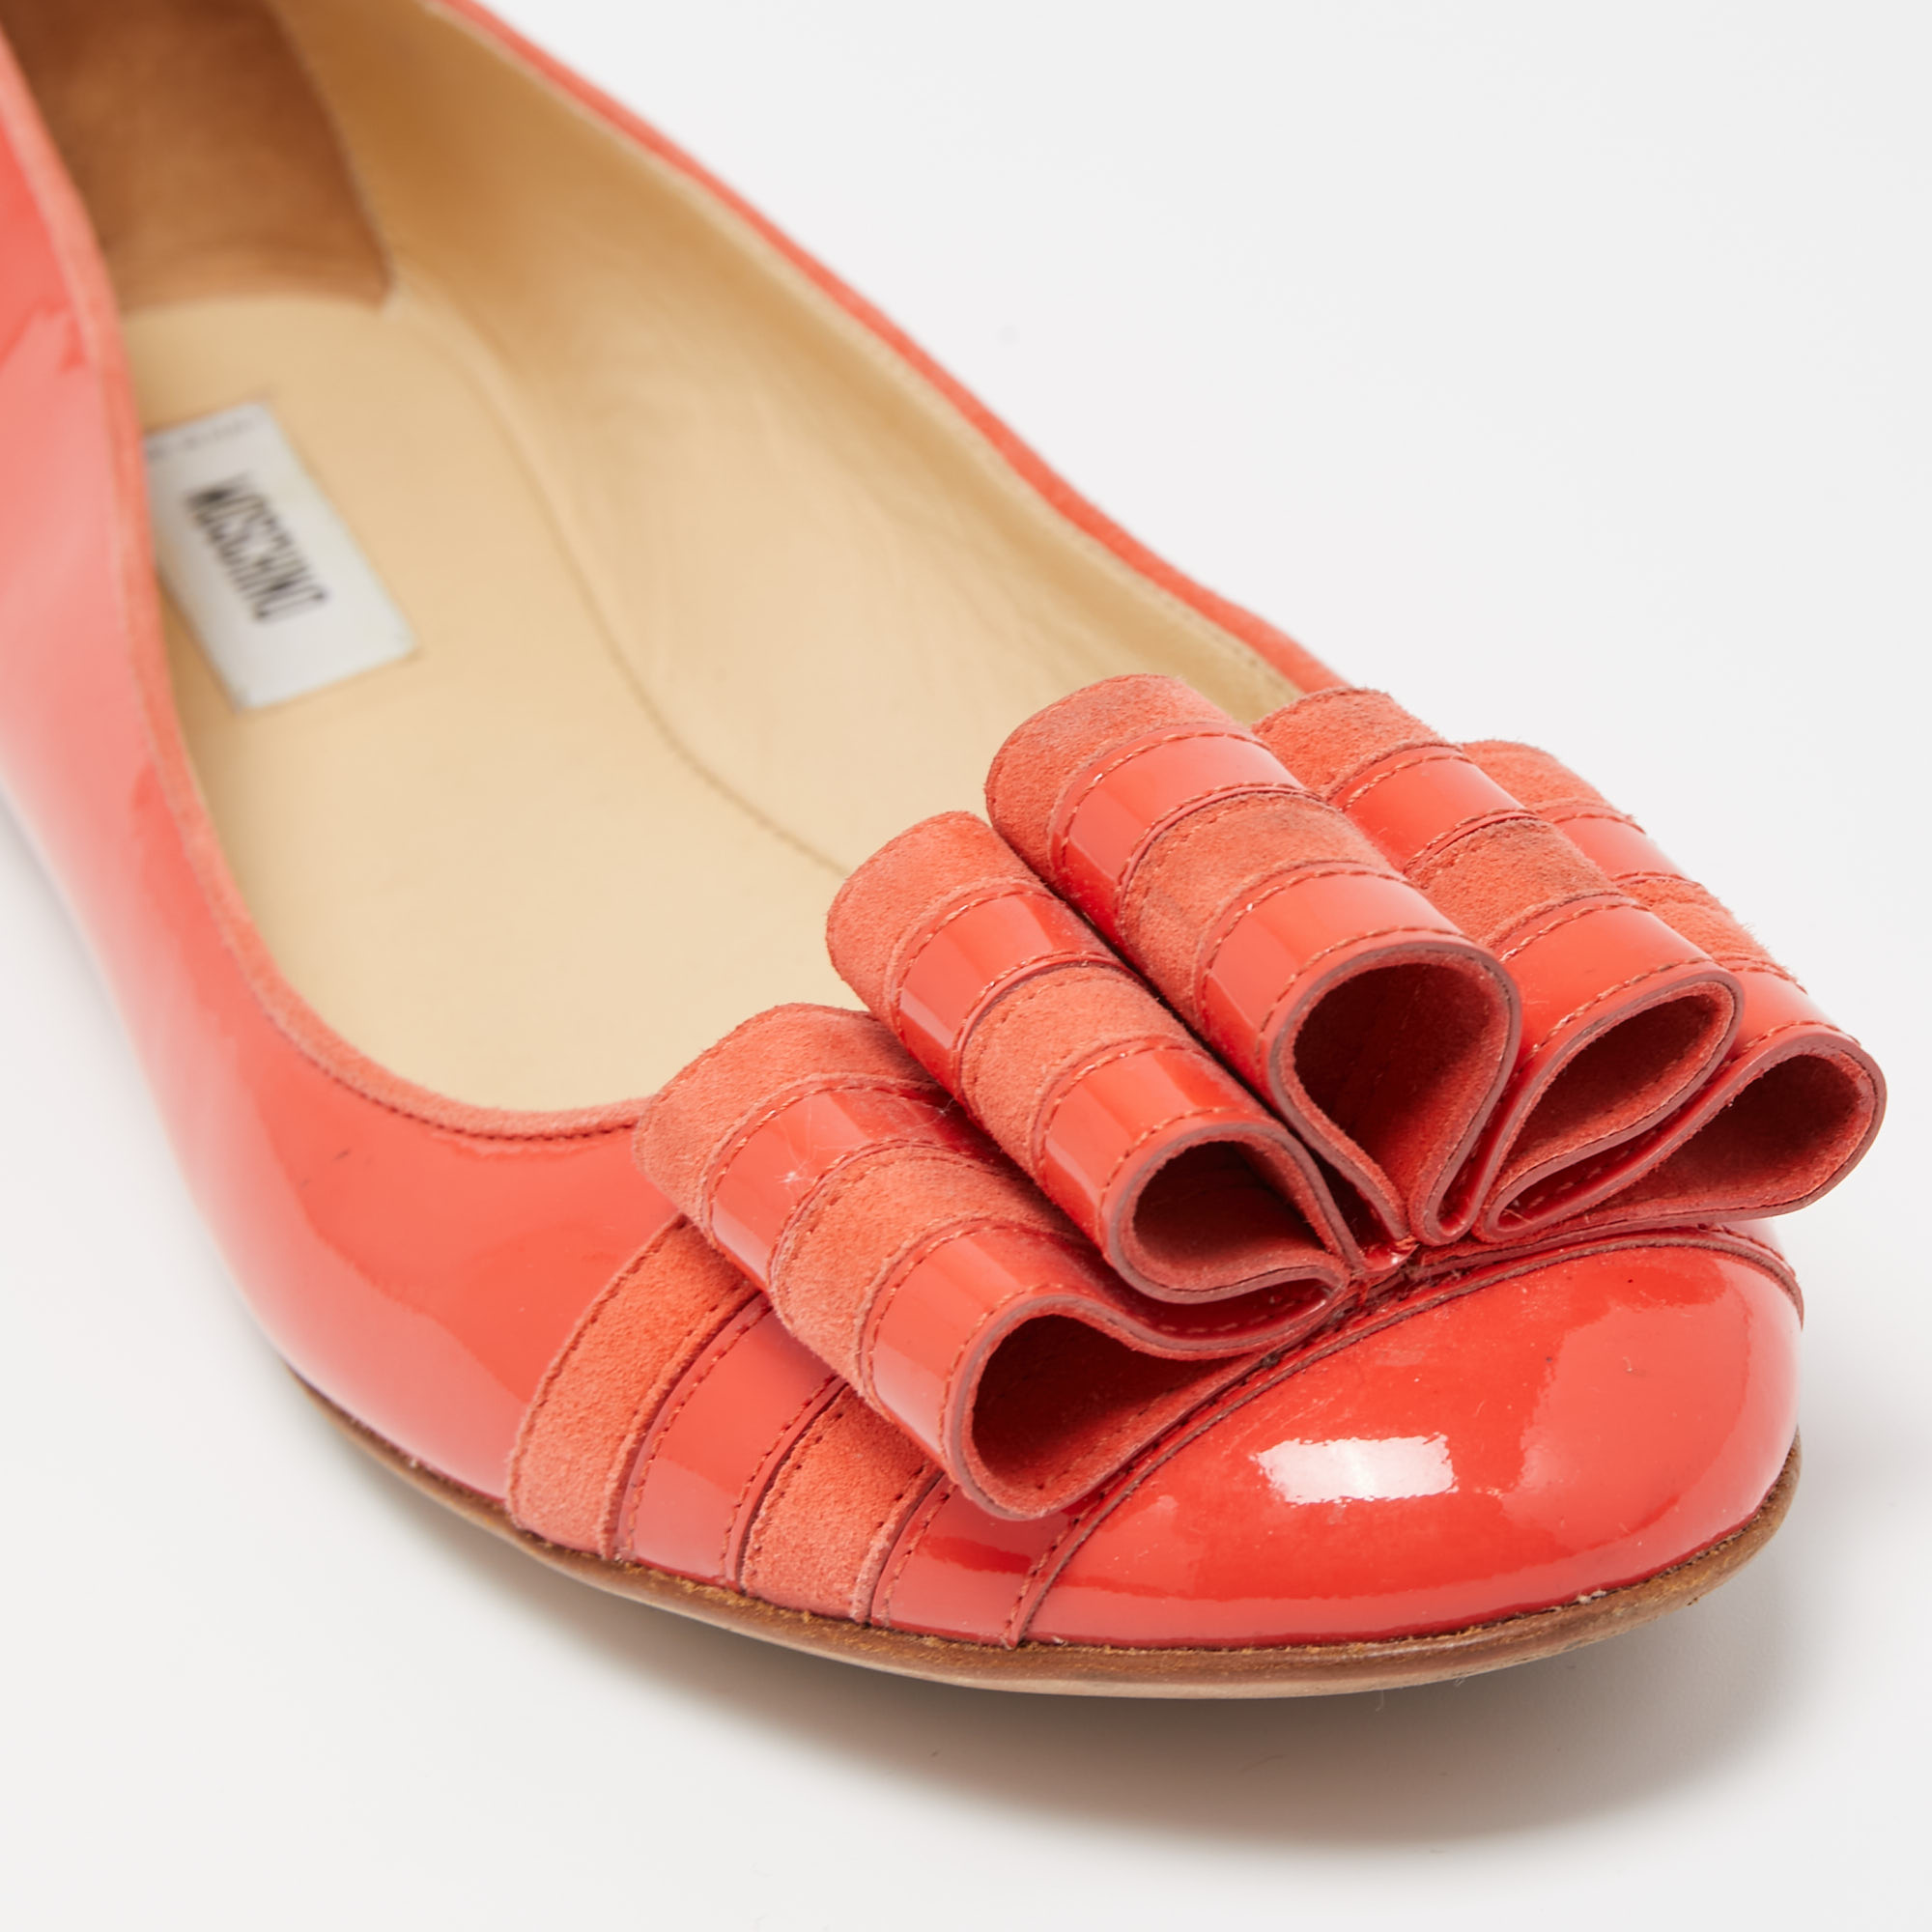 Moschino Orange Patent Leather Ballet Flats Size 40